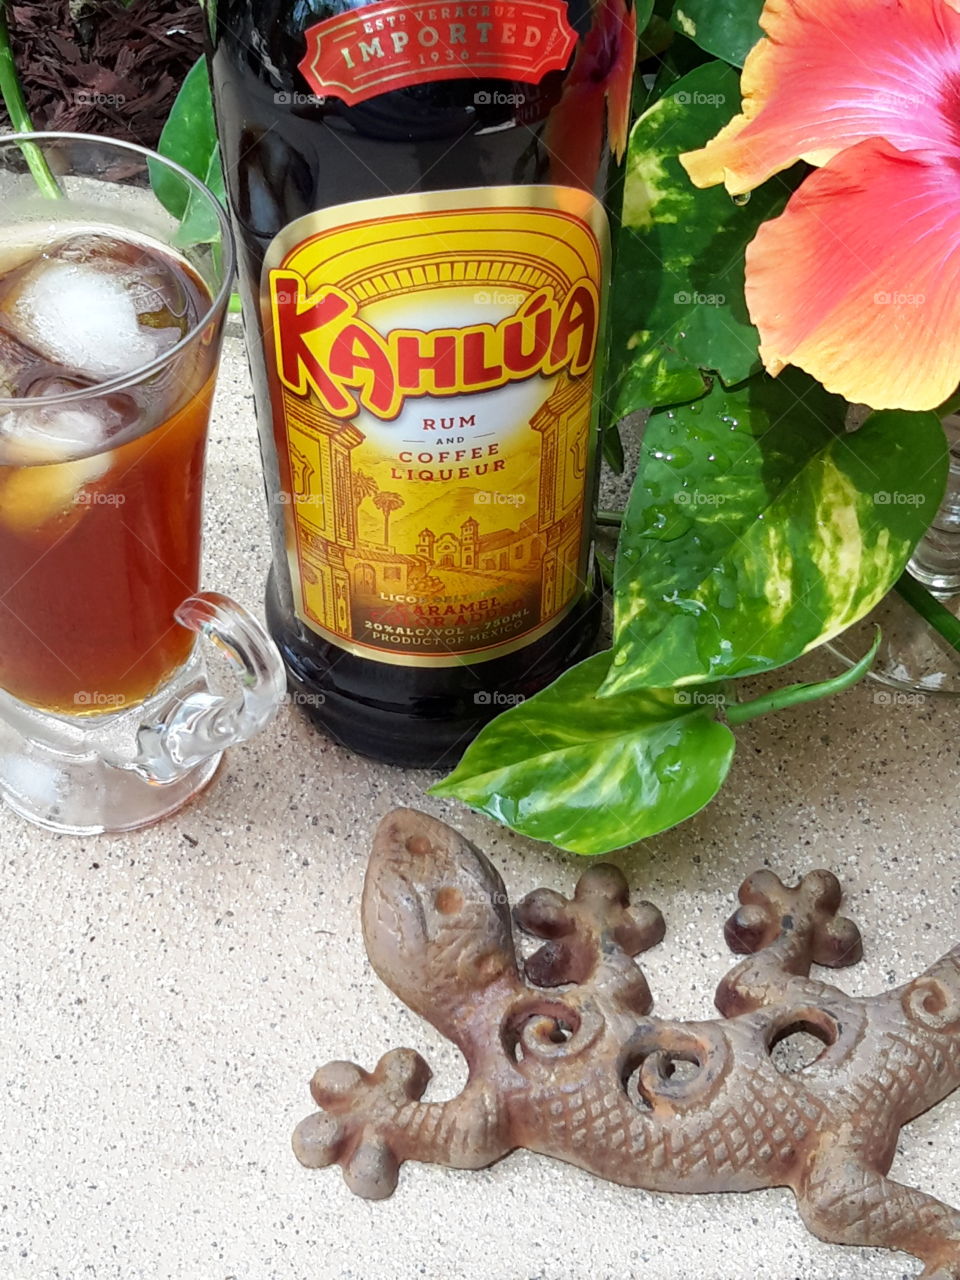 Kahlua rum and coffee liqueur. Kahlua Rum and Coffee Liqueur